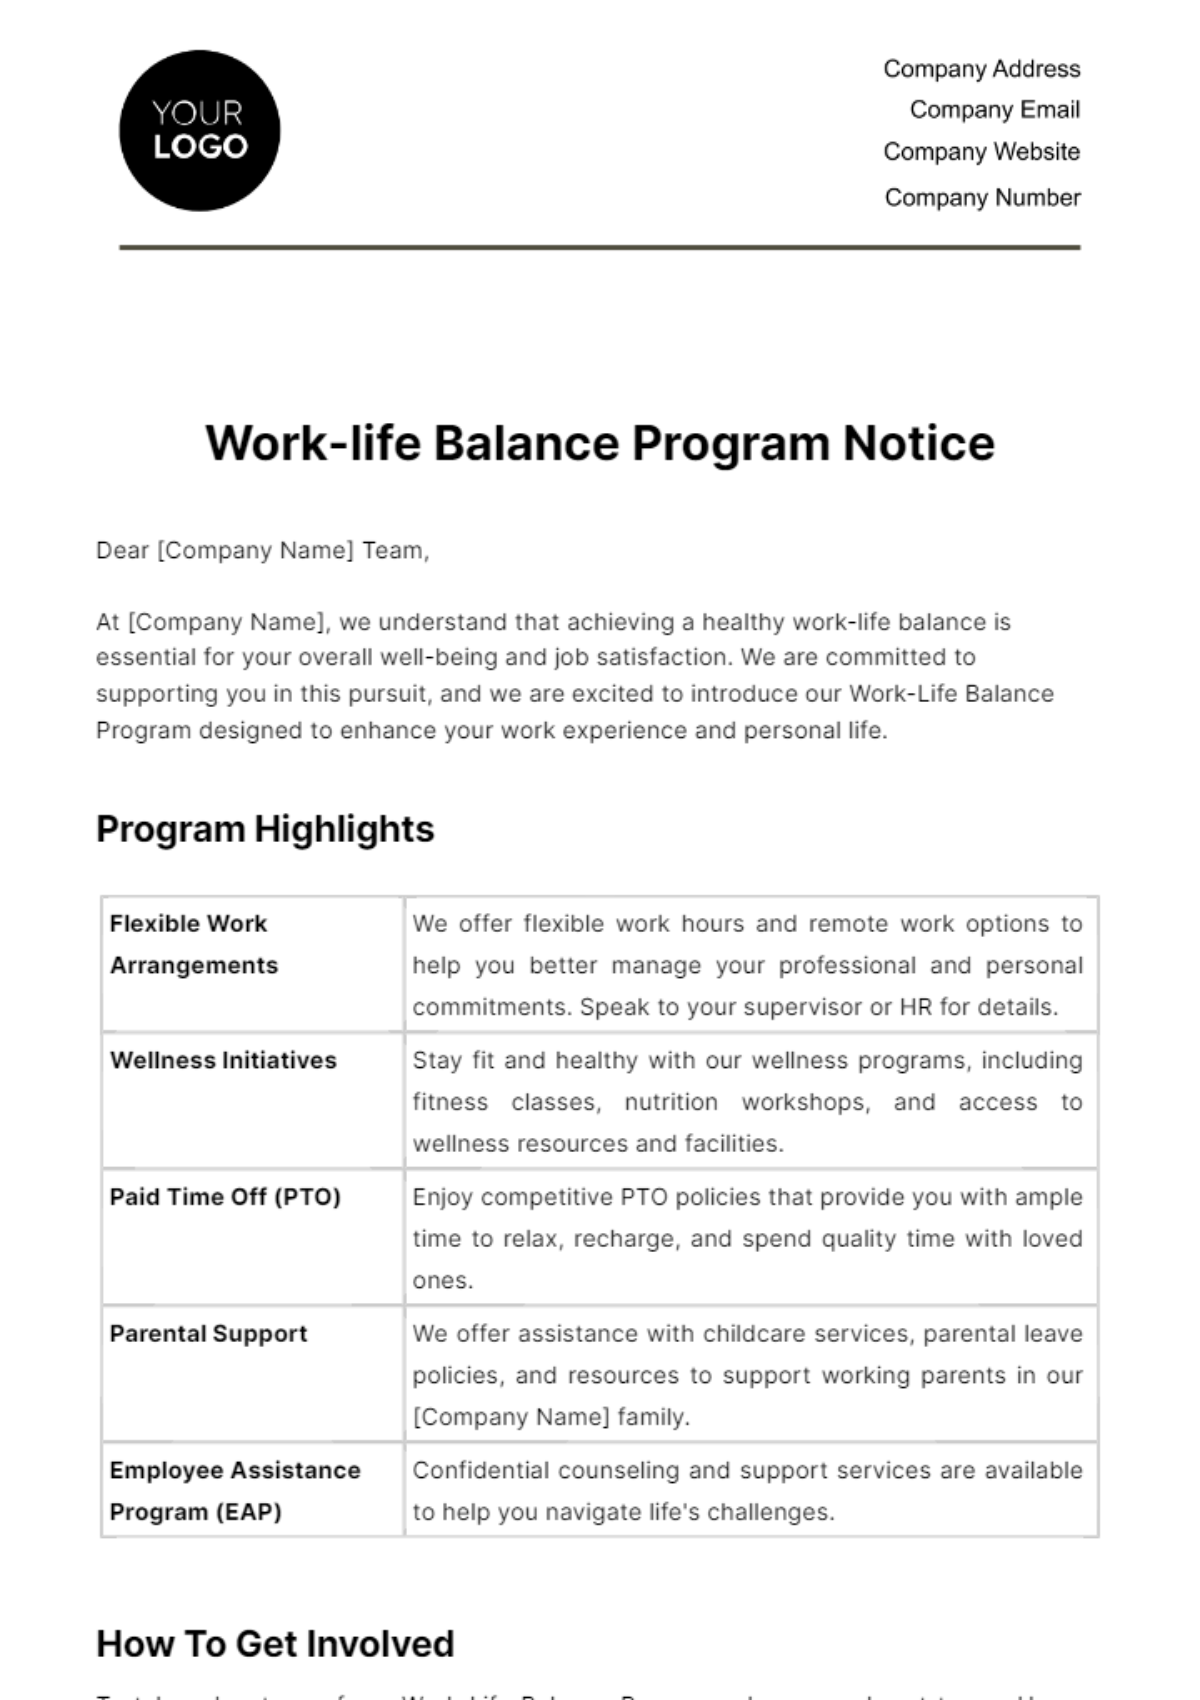 Work-life Balance Program Notice HR Template